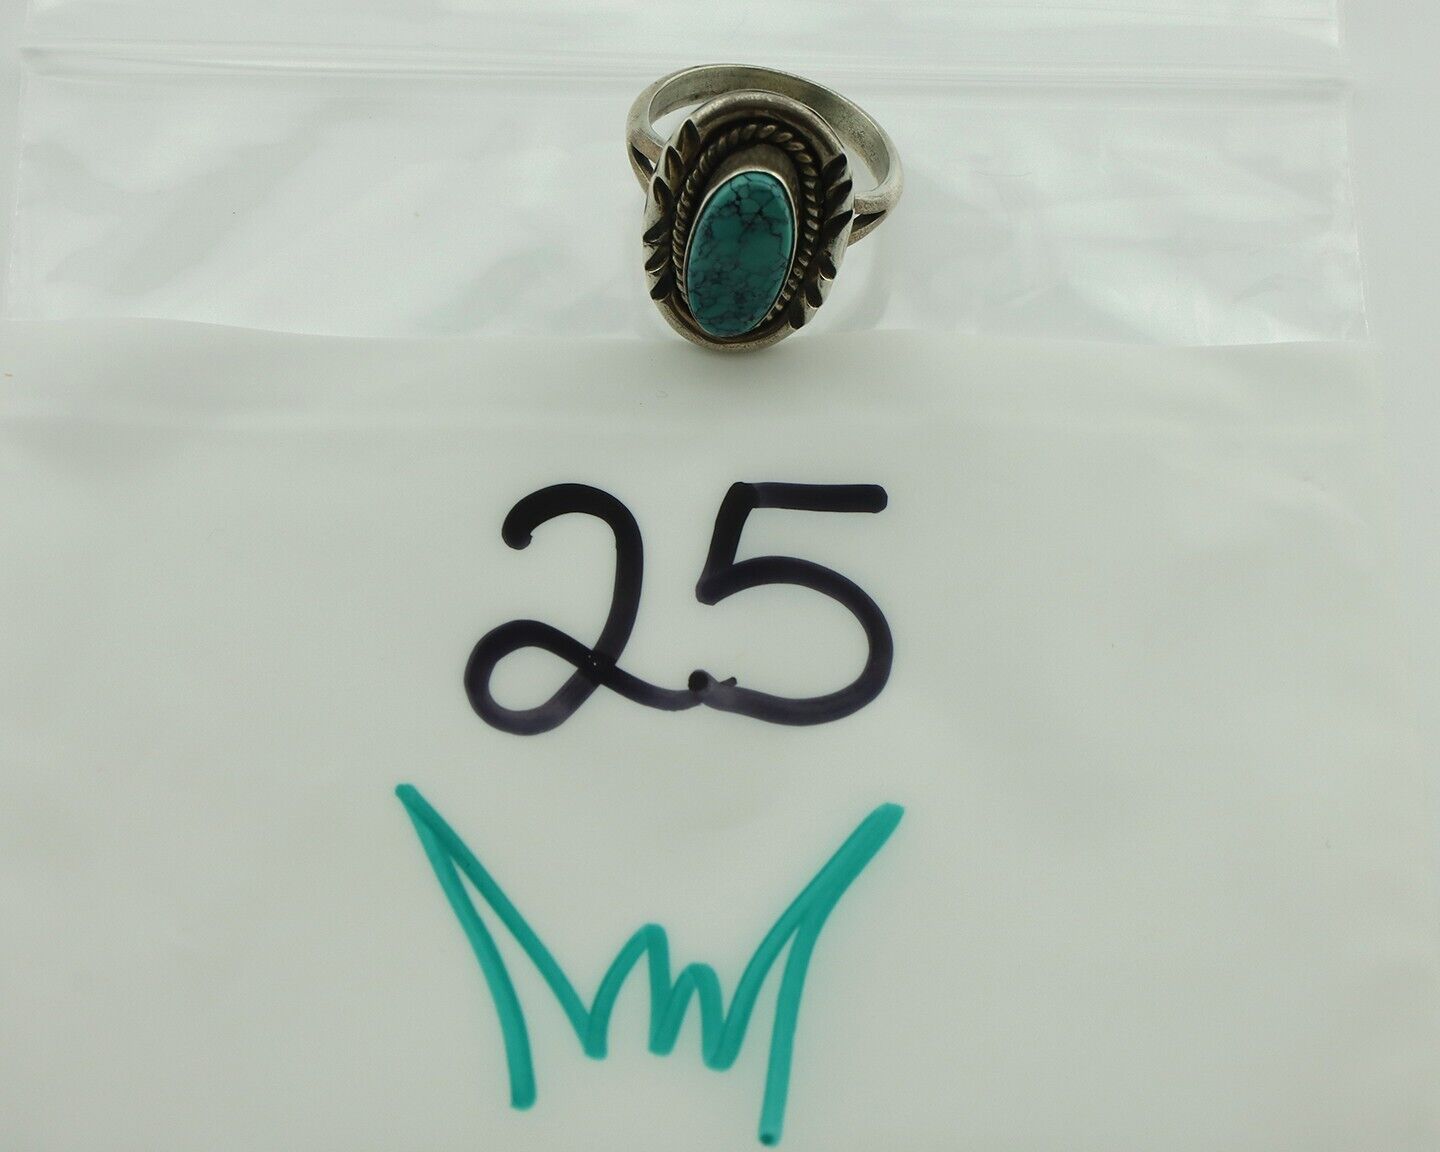 Navajo Ring 925 Silver Blue Spiderweb Turquoise Native American Artist C.80's